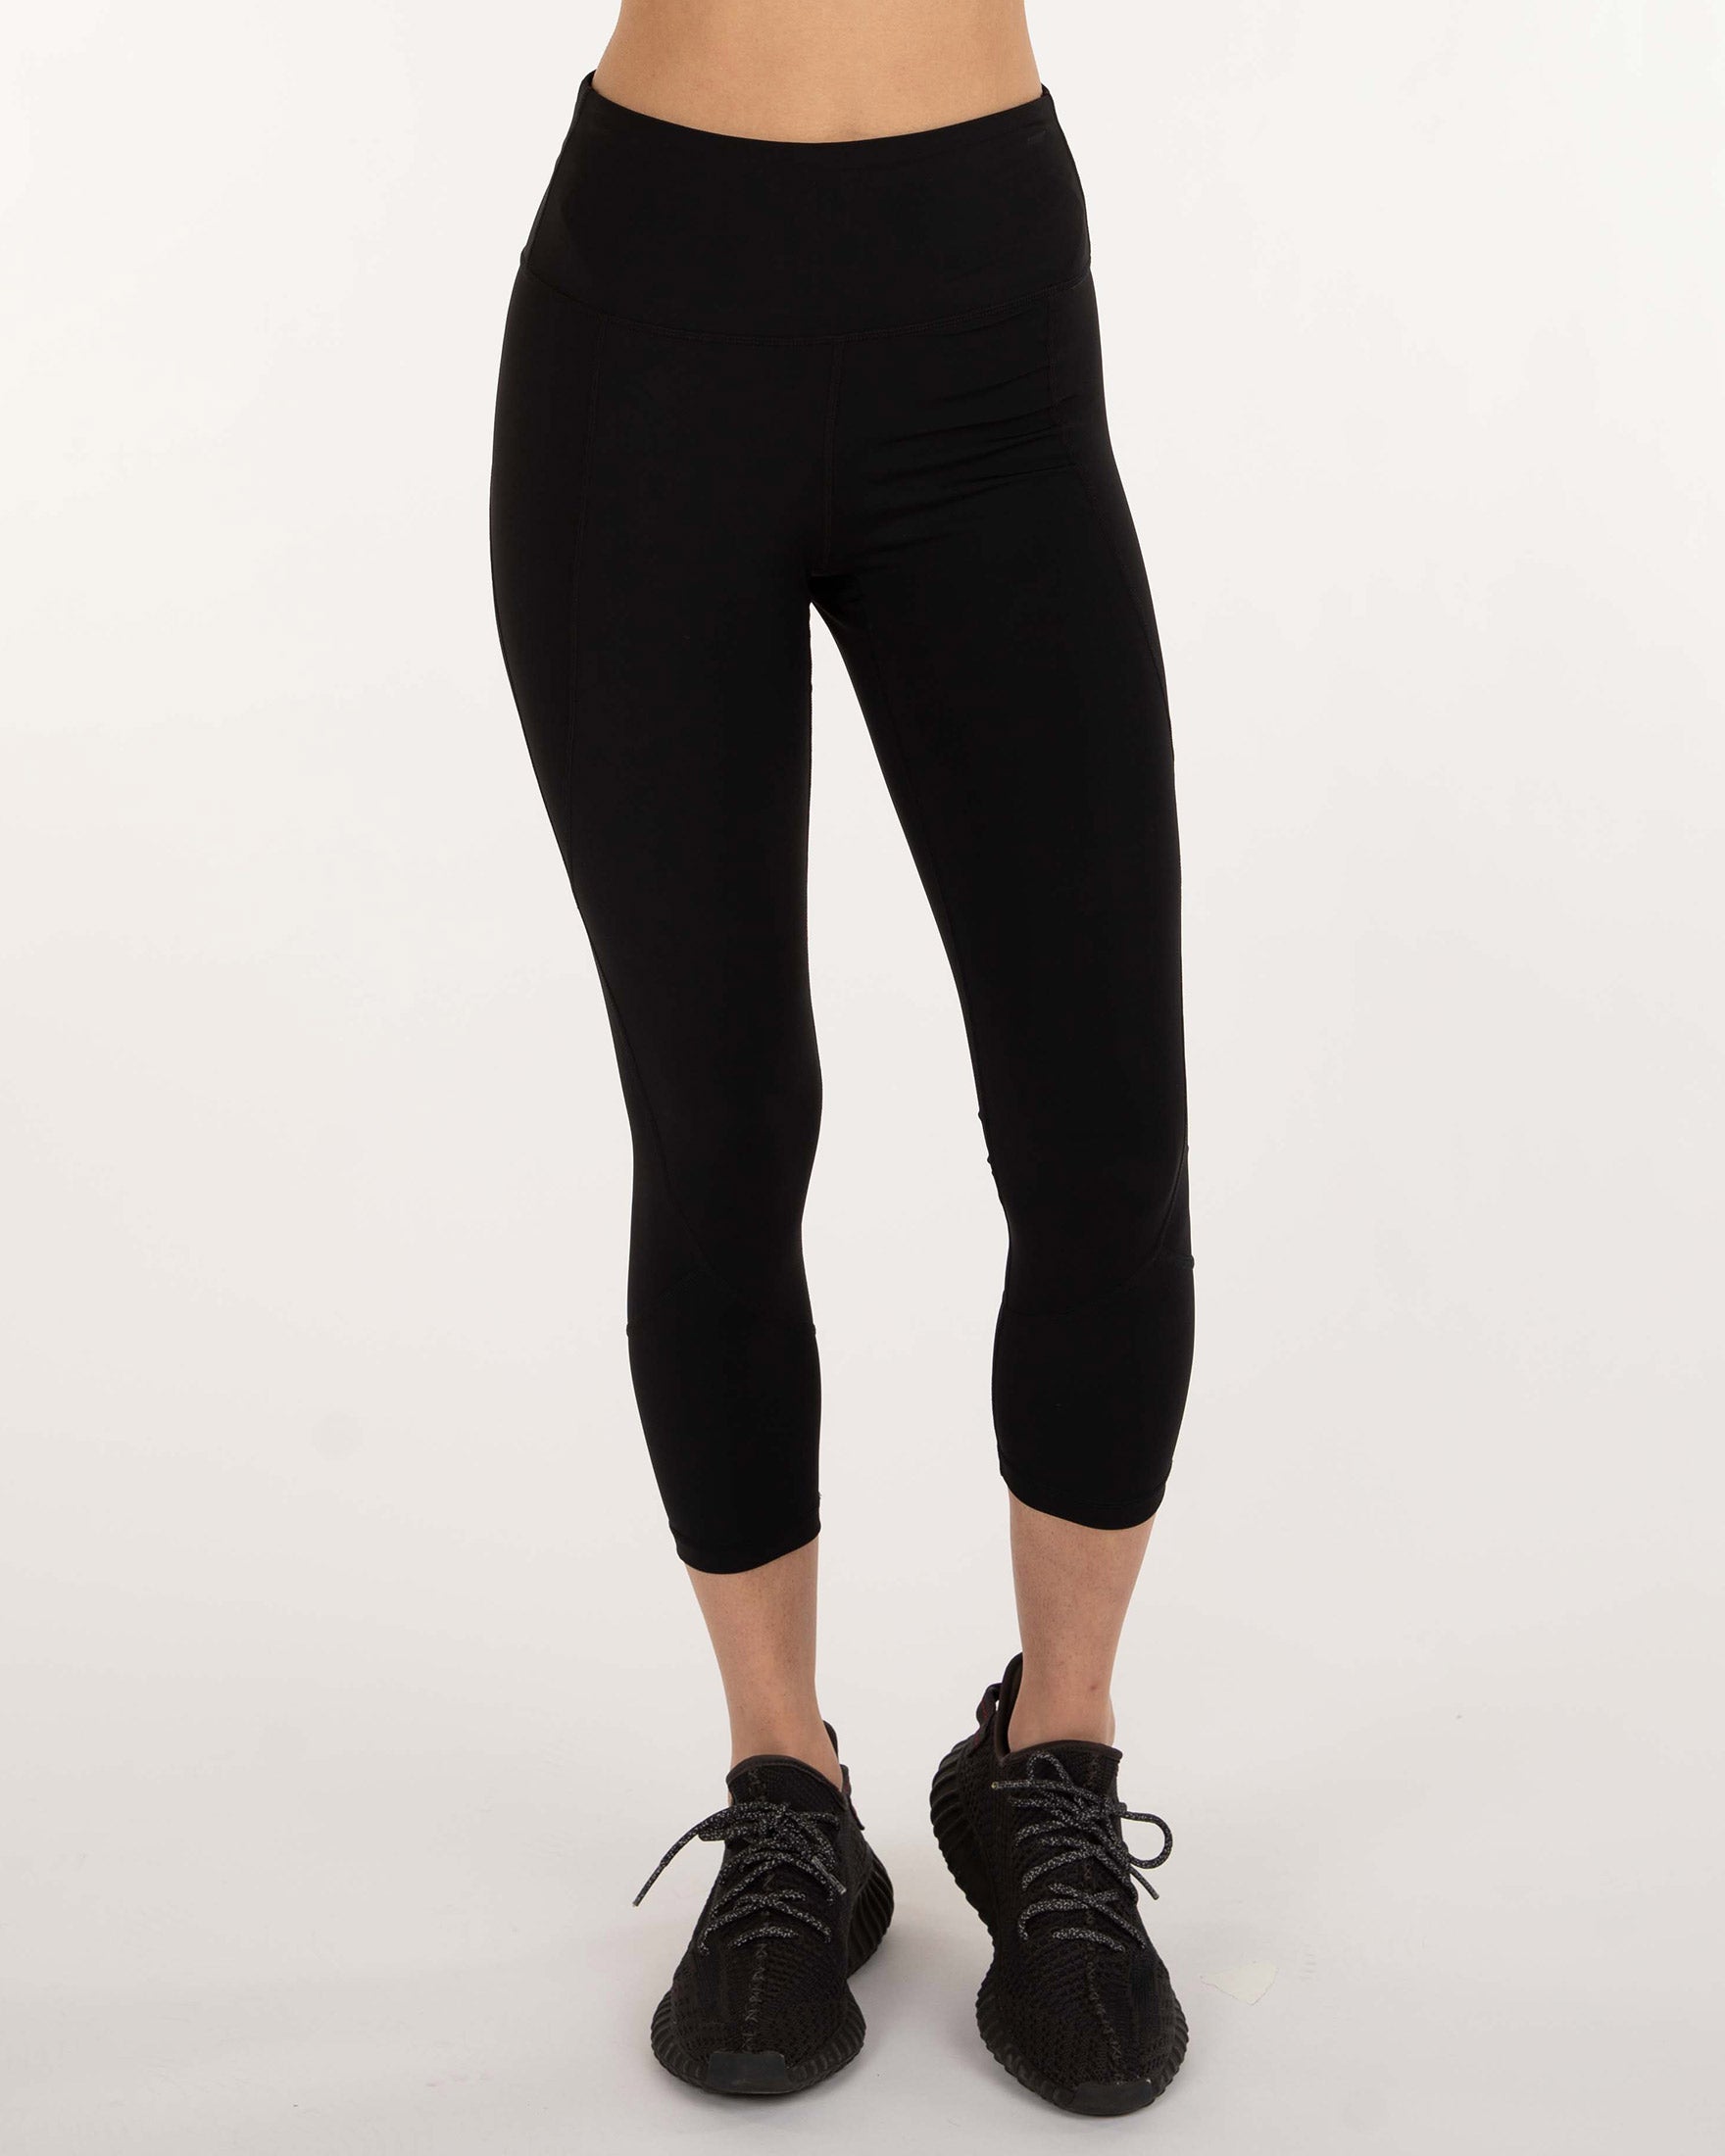 Lululemon STILL Black Yoga Pants Size 4 XS Leggings 30.5 Inseam